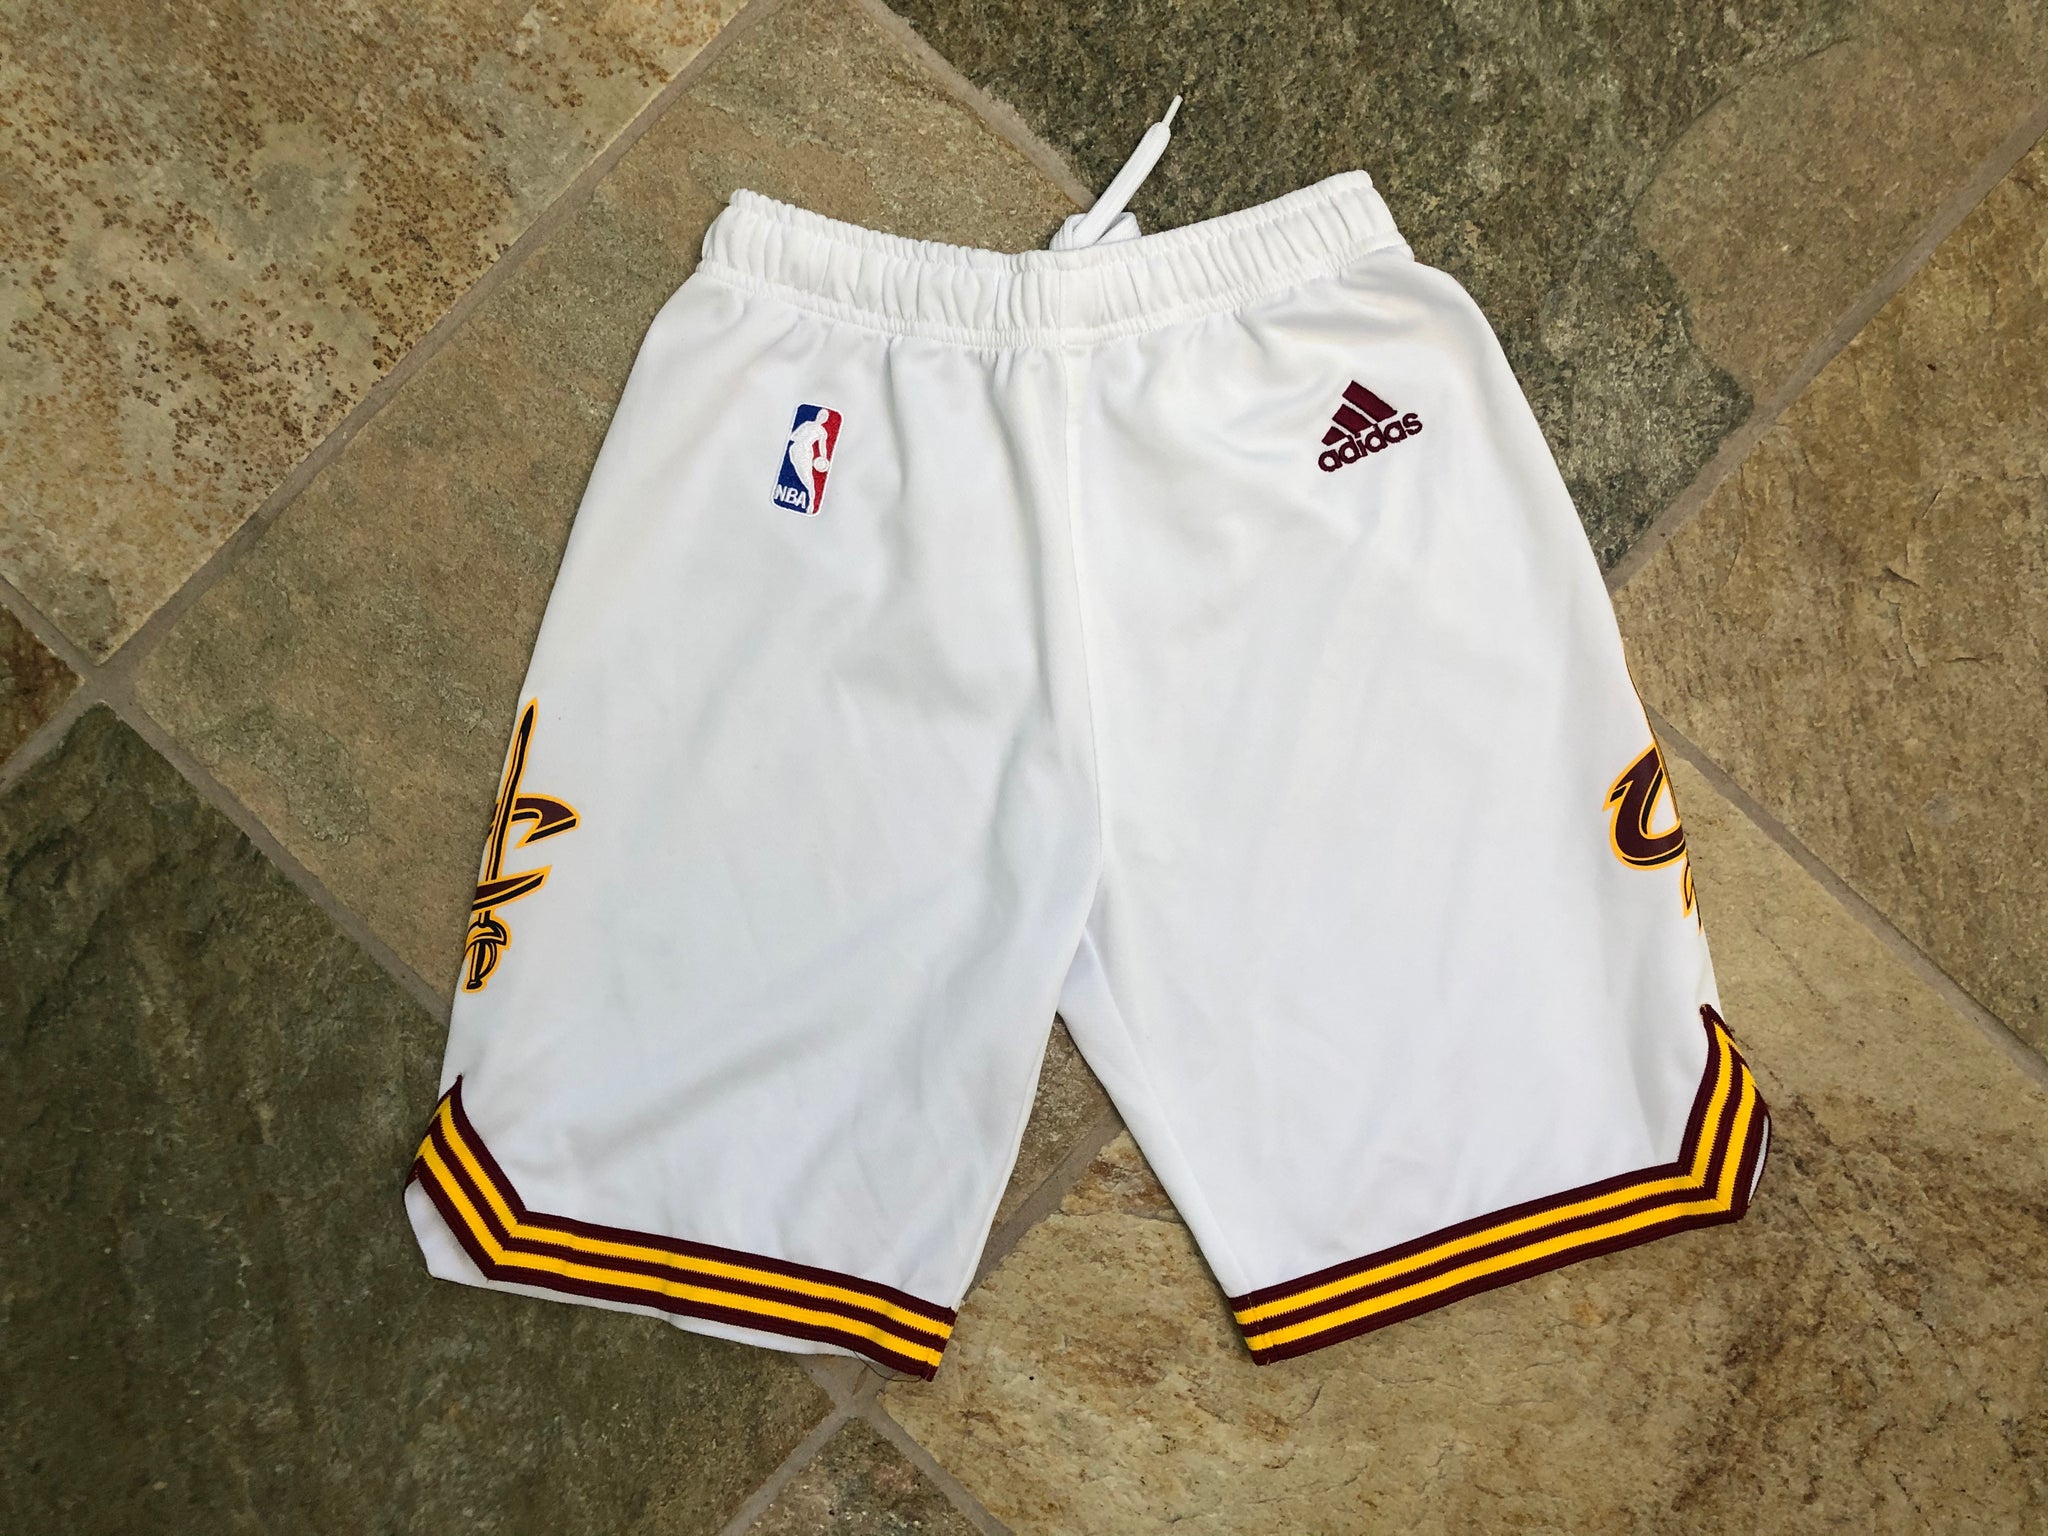 Cleveland Cavaliers Cavs basketball nba Nike Swingman Shorts Size